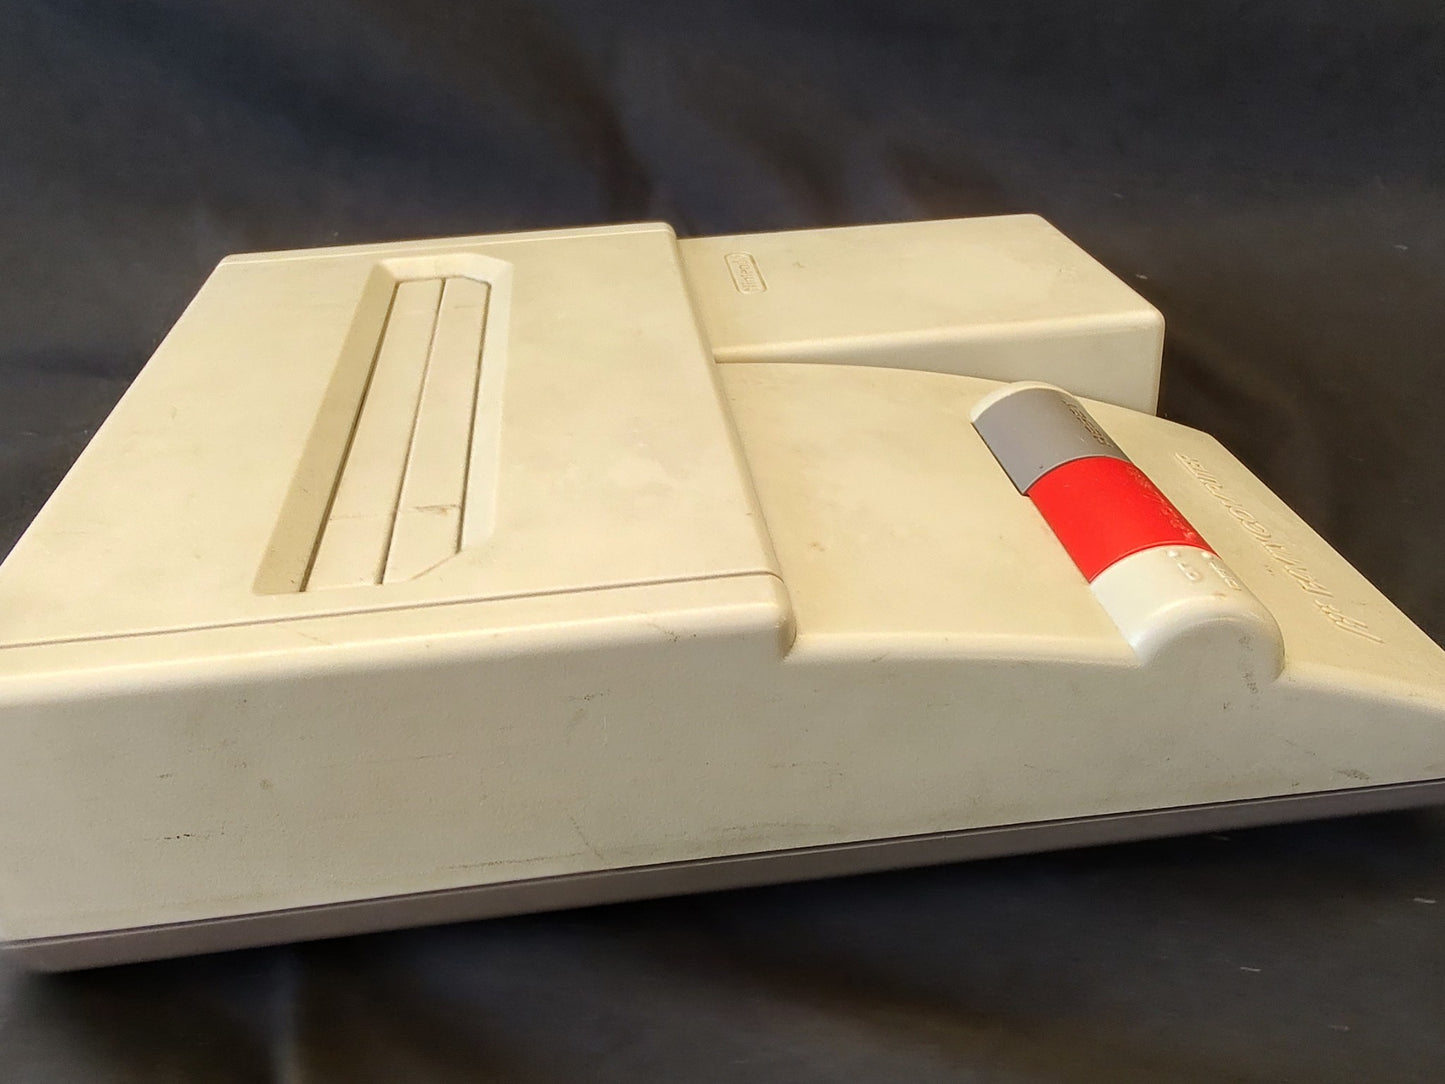 Nintendo New (AV) Famicom (NES2) Console,2 Pads and Games set, Working-g0130-